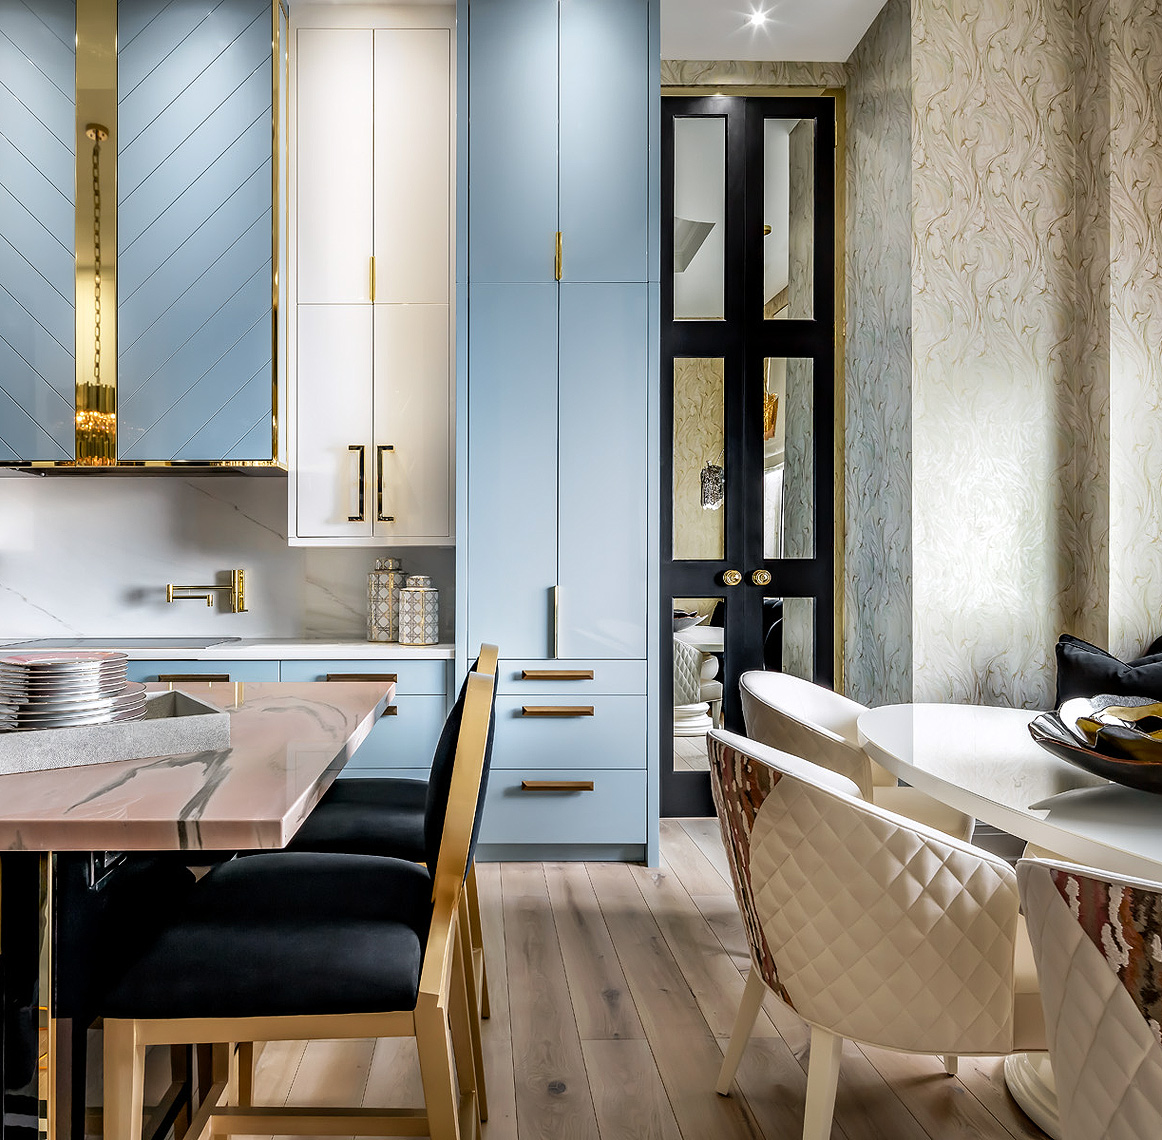 Luxury kitchen at the St Regis residences in Toronto, Canada - Toronto Architectural Interior Photographer